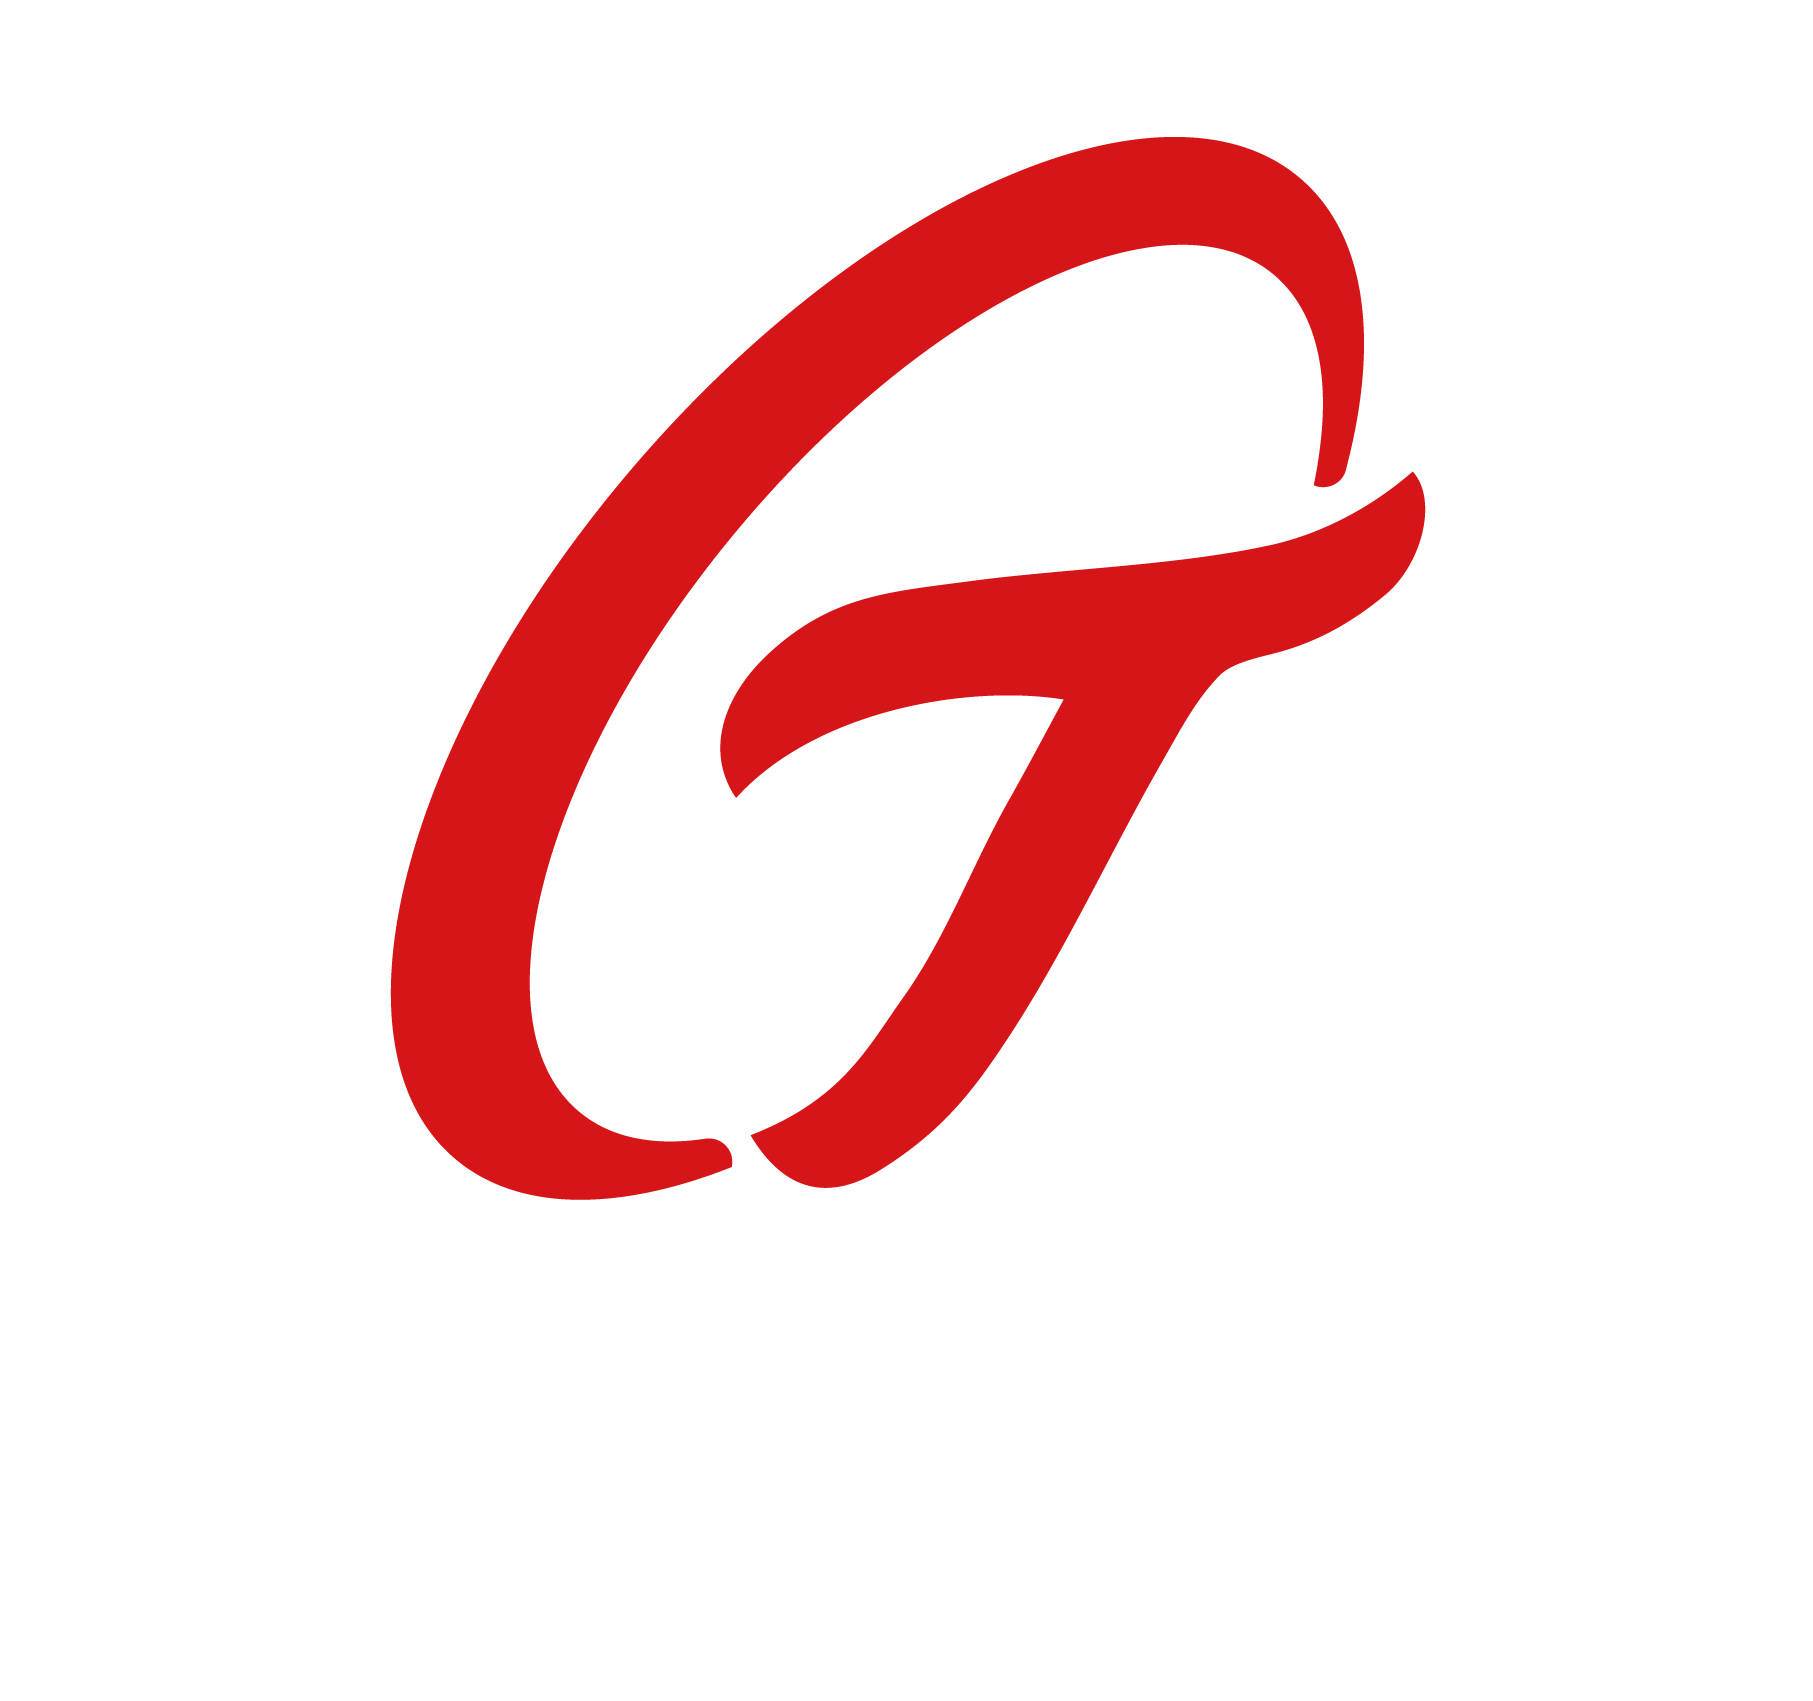 Bio-Raid